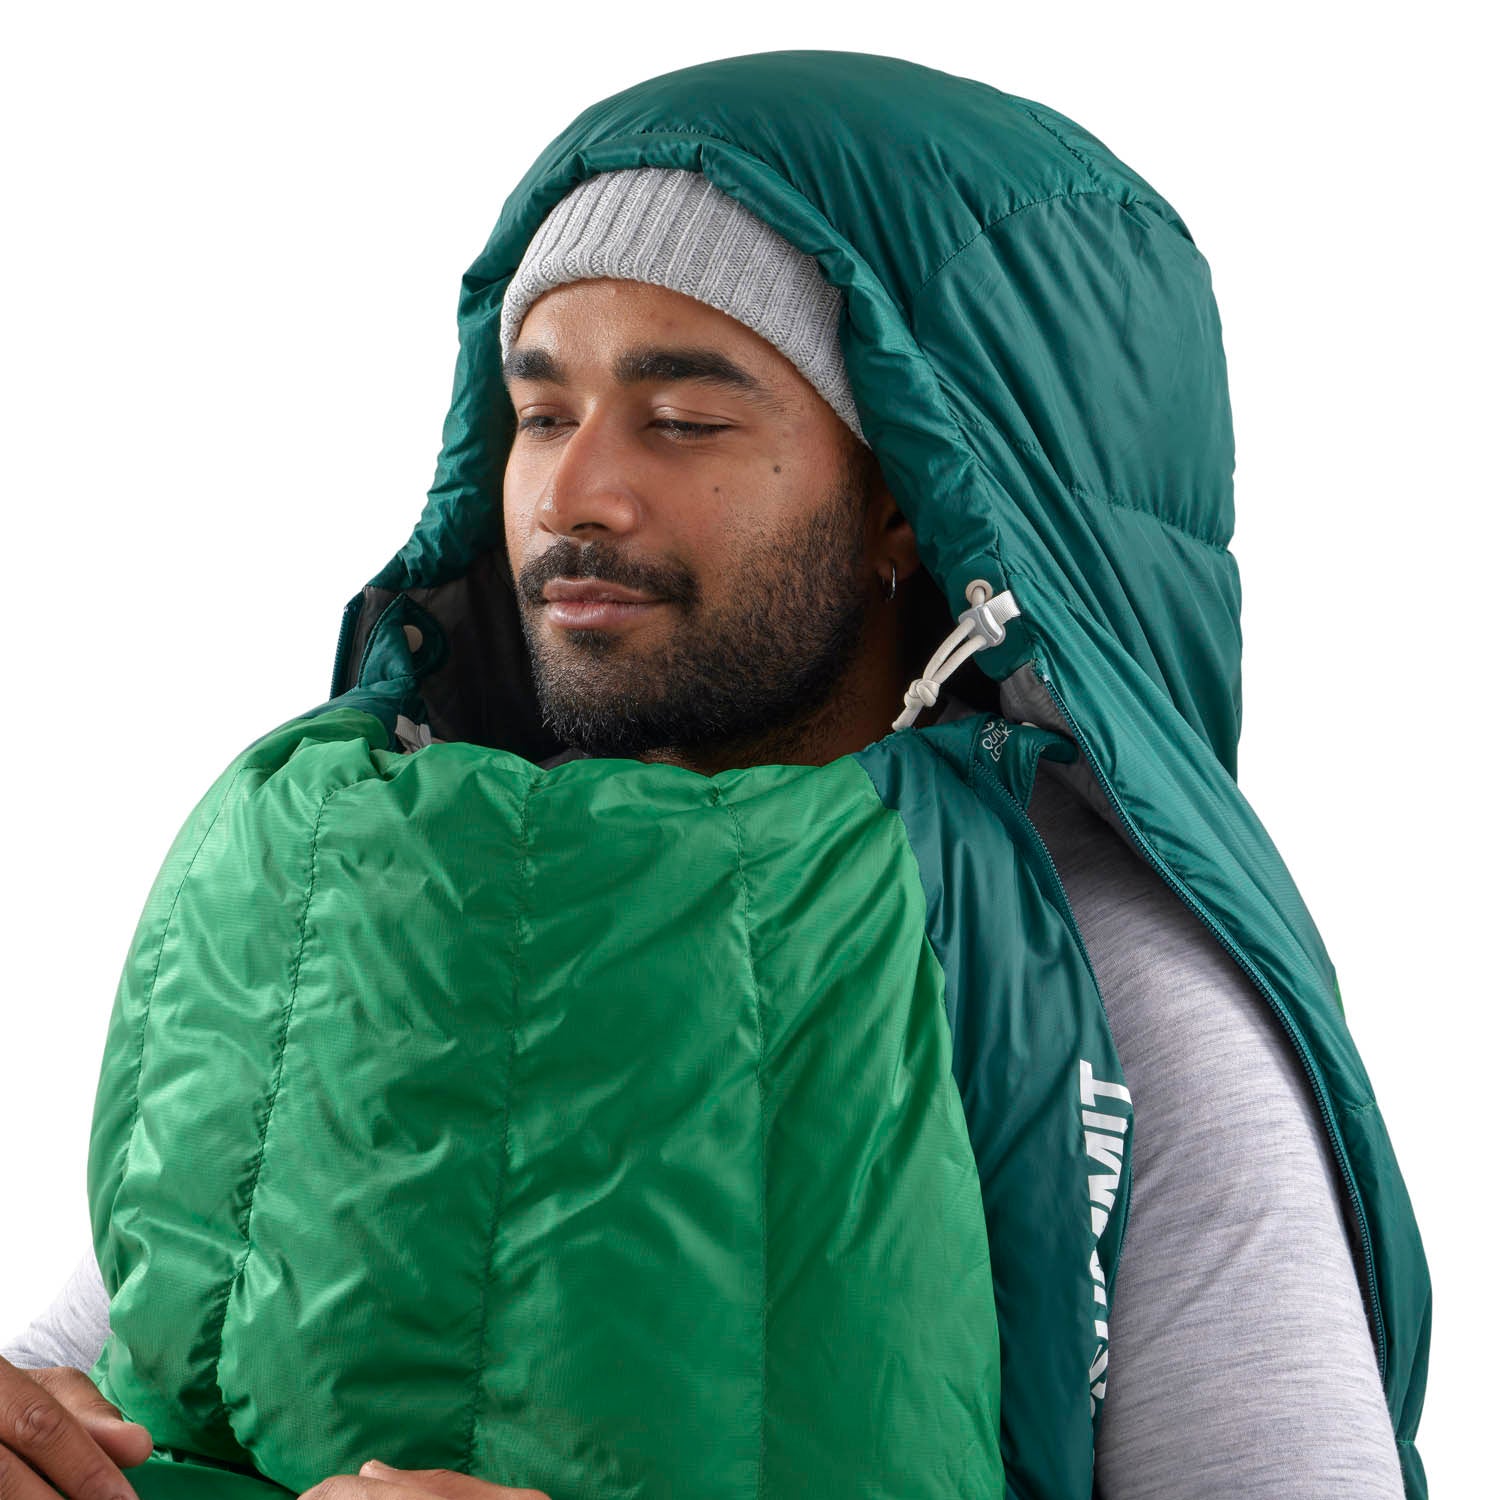 Ascent Down Sleeping Bag (-9°C & -1°C)